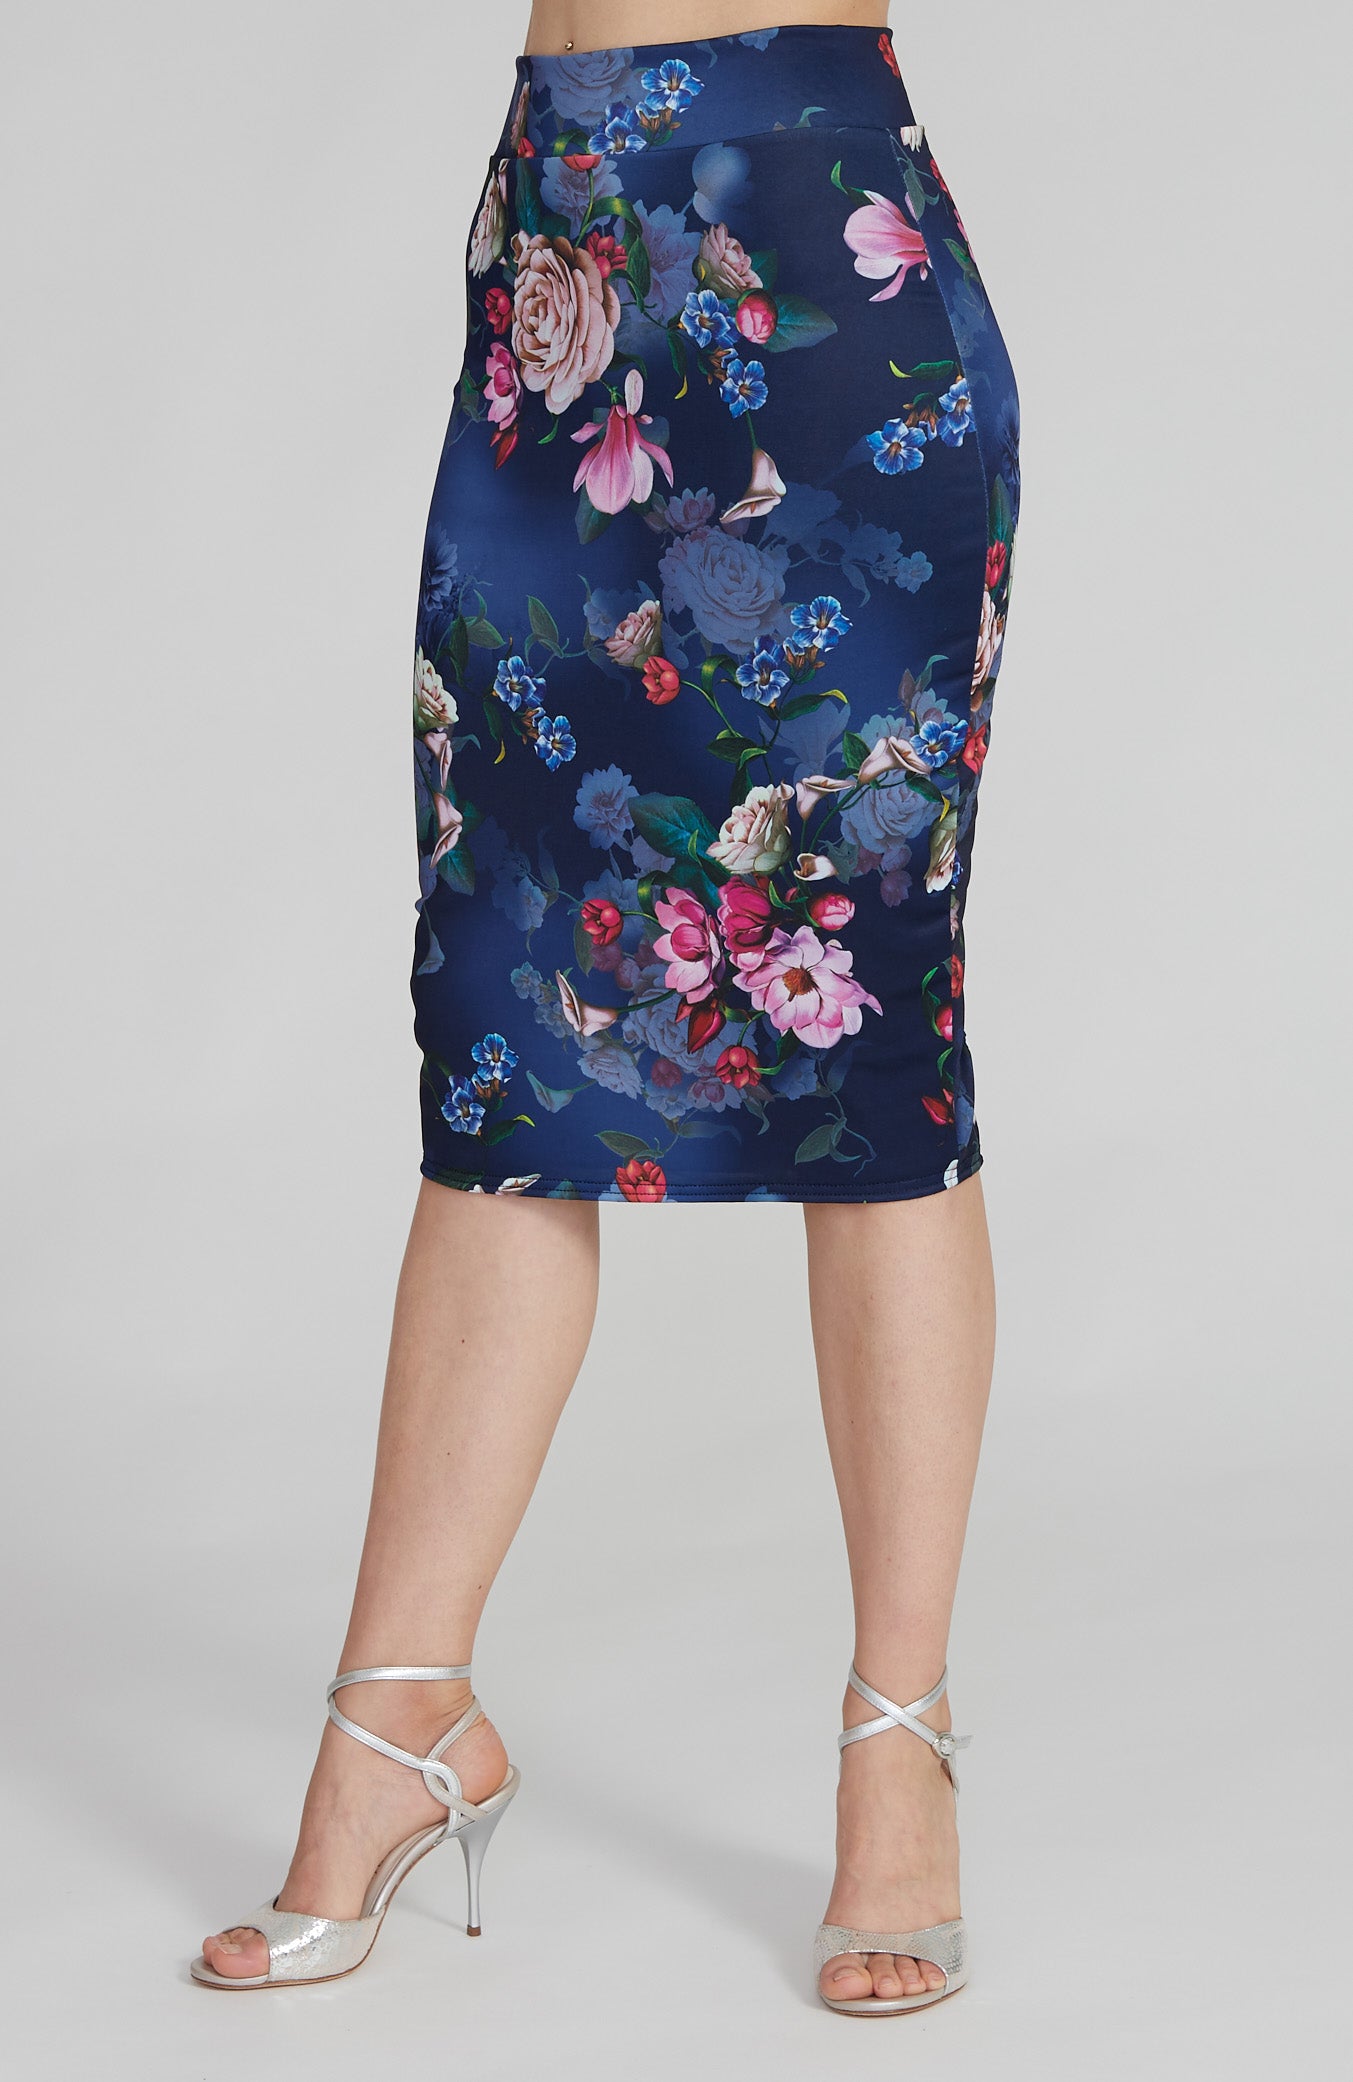 CLARA - Reversible Skirt in Vivid Blossoms & Navy Blue